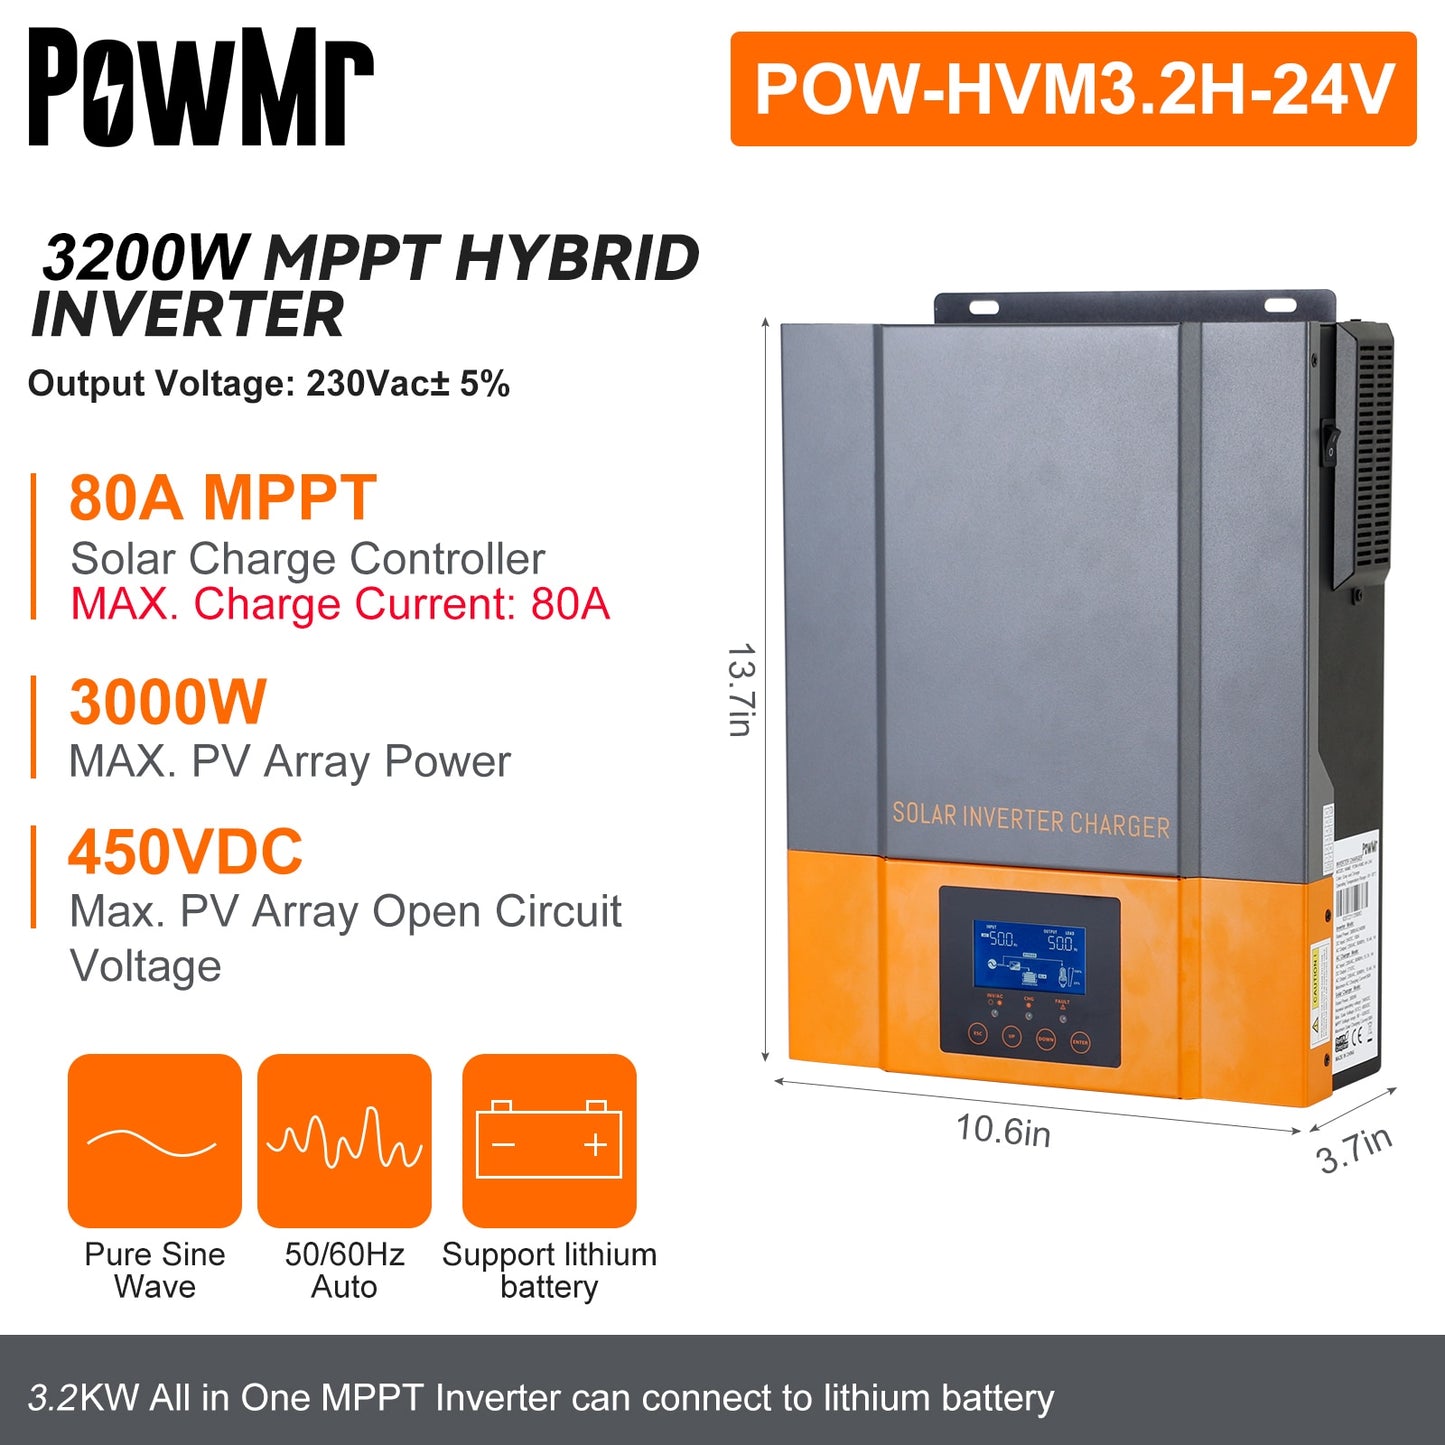 PowMr 3.2KW Hybrid Solar Inverter 24V to 230V MPPT 80A Output Photovoltaic Hybrid Inverter Build-in MPPT Solar Charge Controller